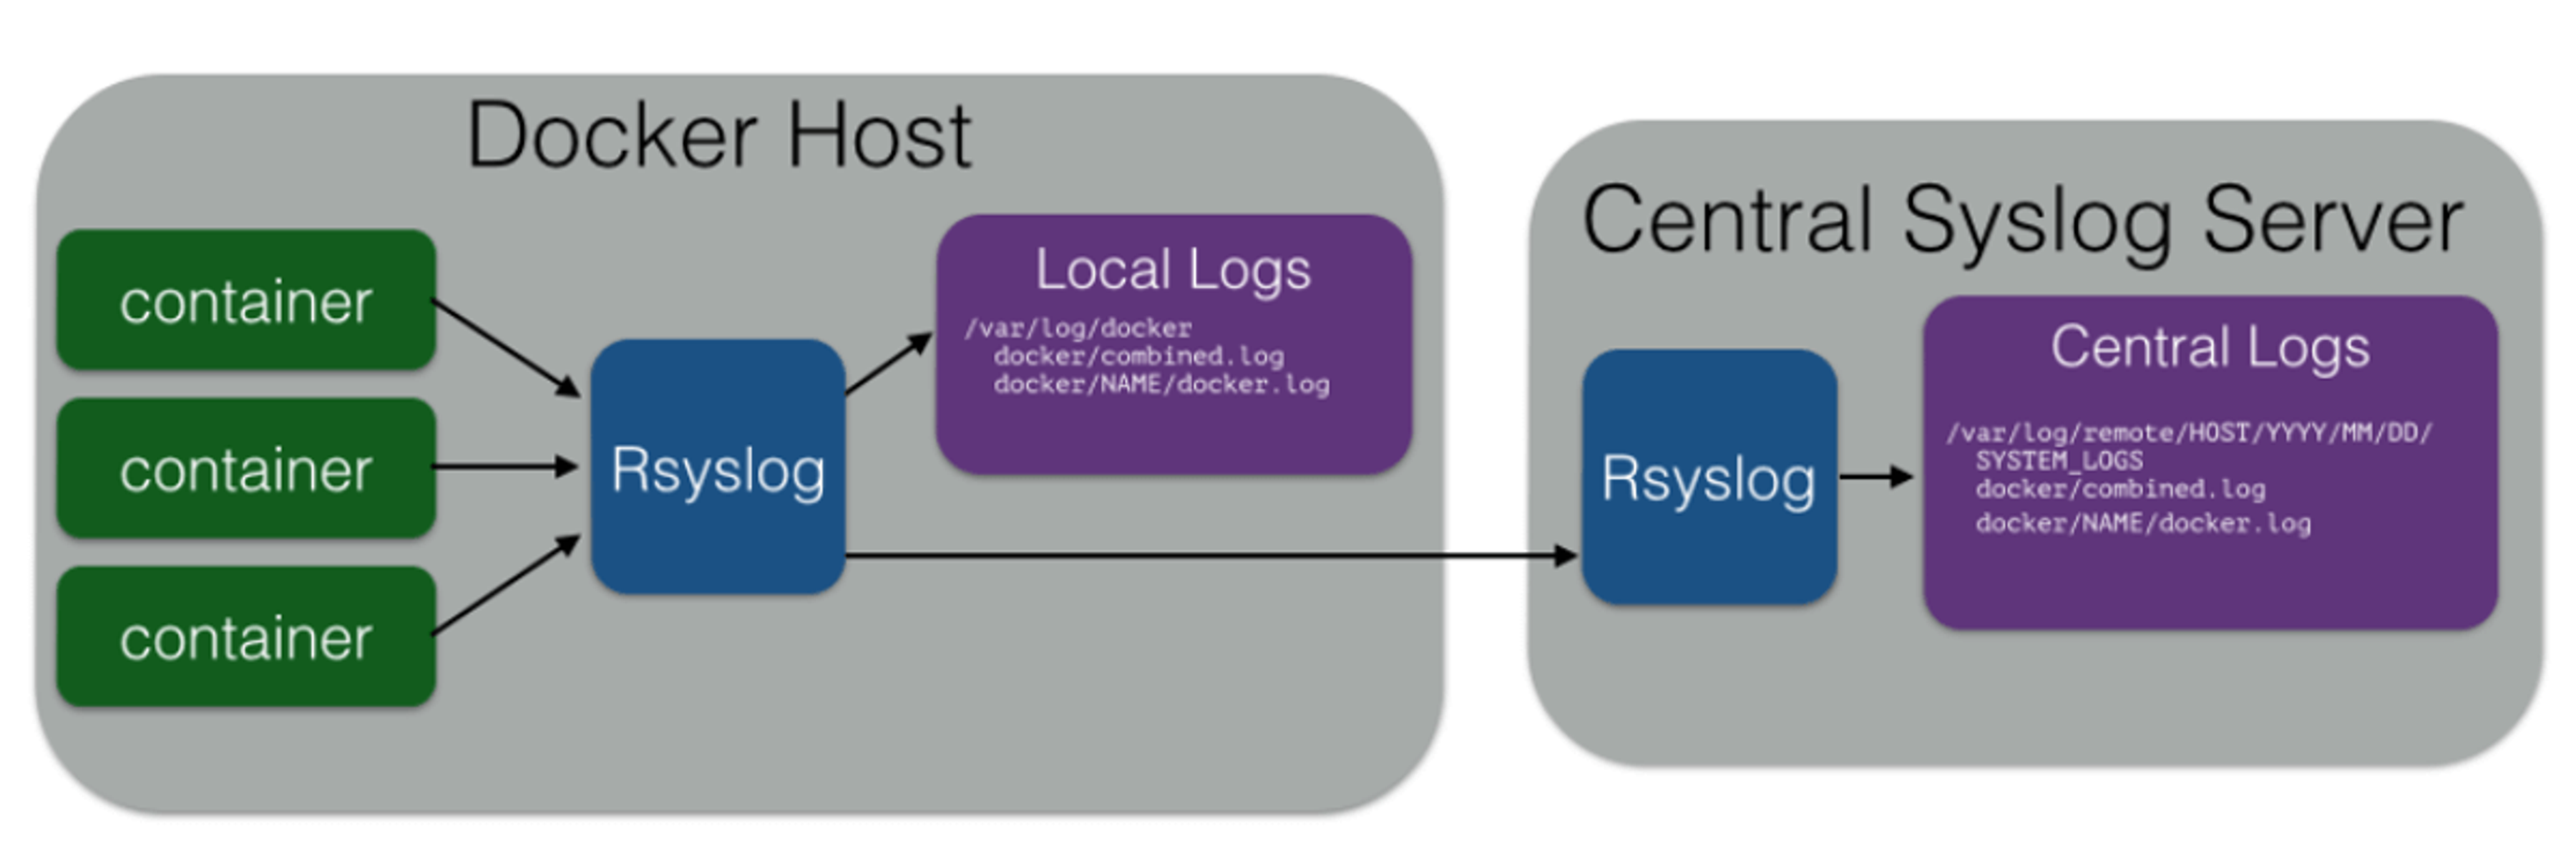 Diagram showing docker host flowing to central syslog server.